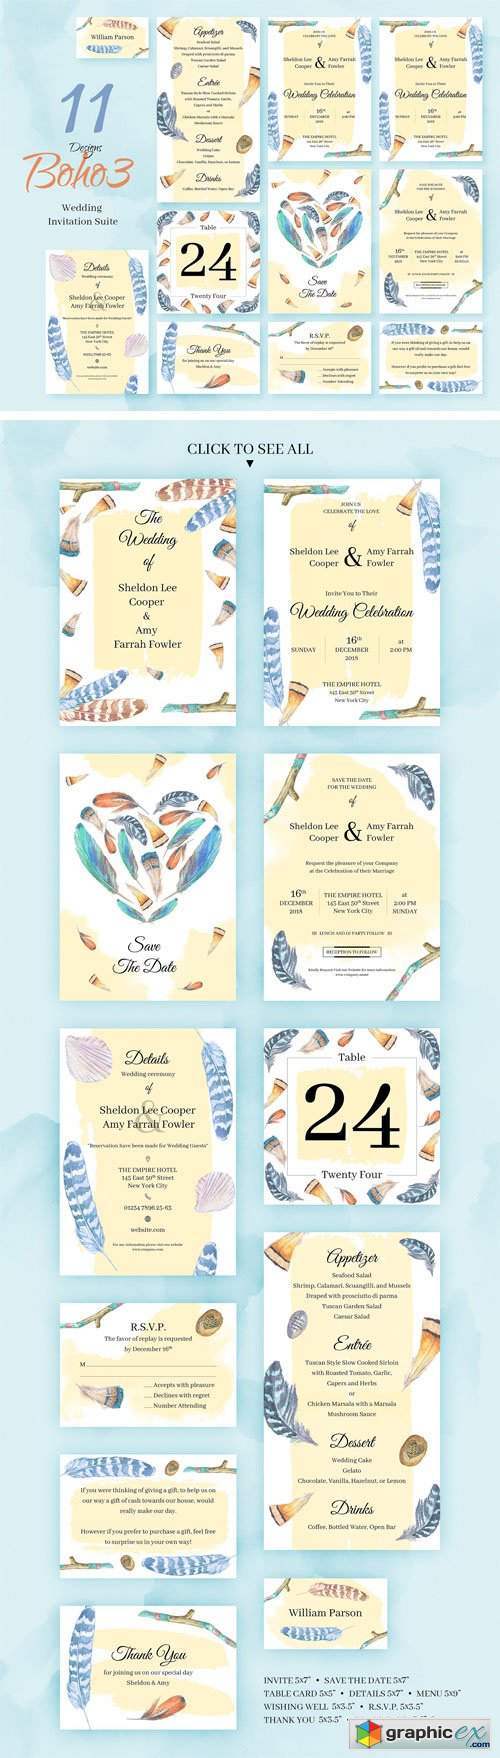 Boho3. Wedding Invitation Package